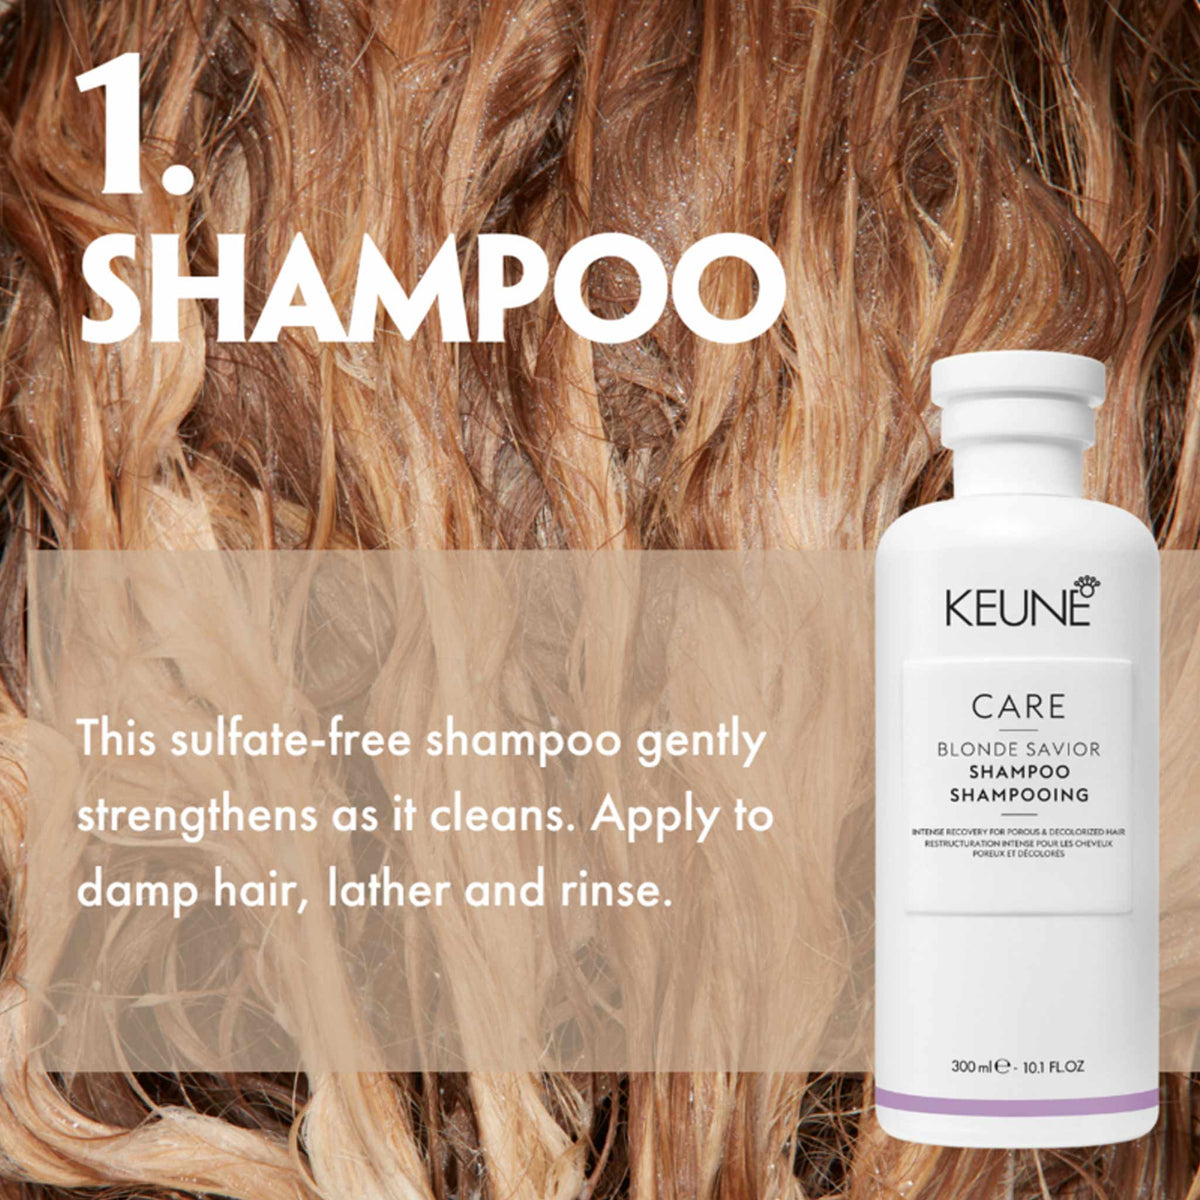 Keune Care Blonde Savior Shampoo